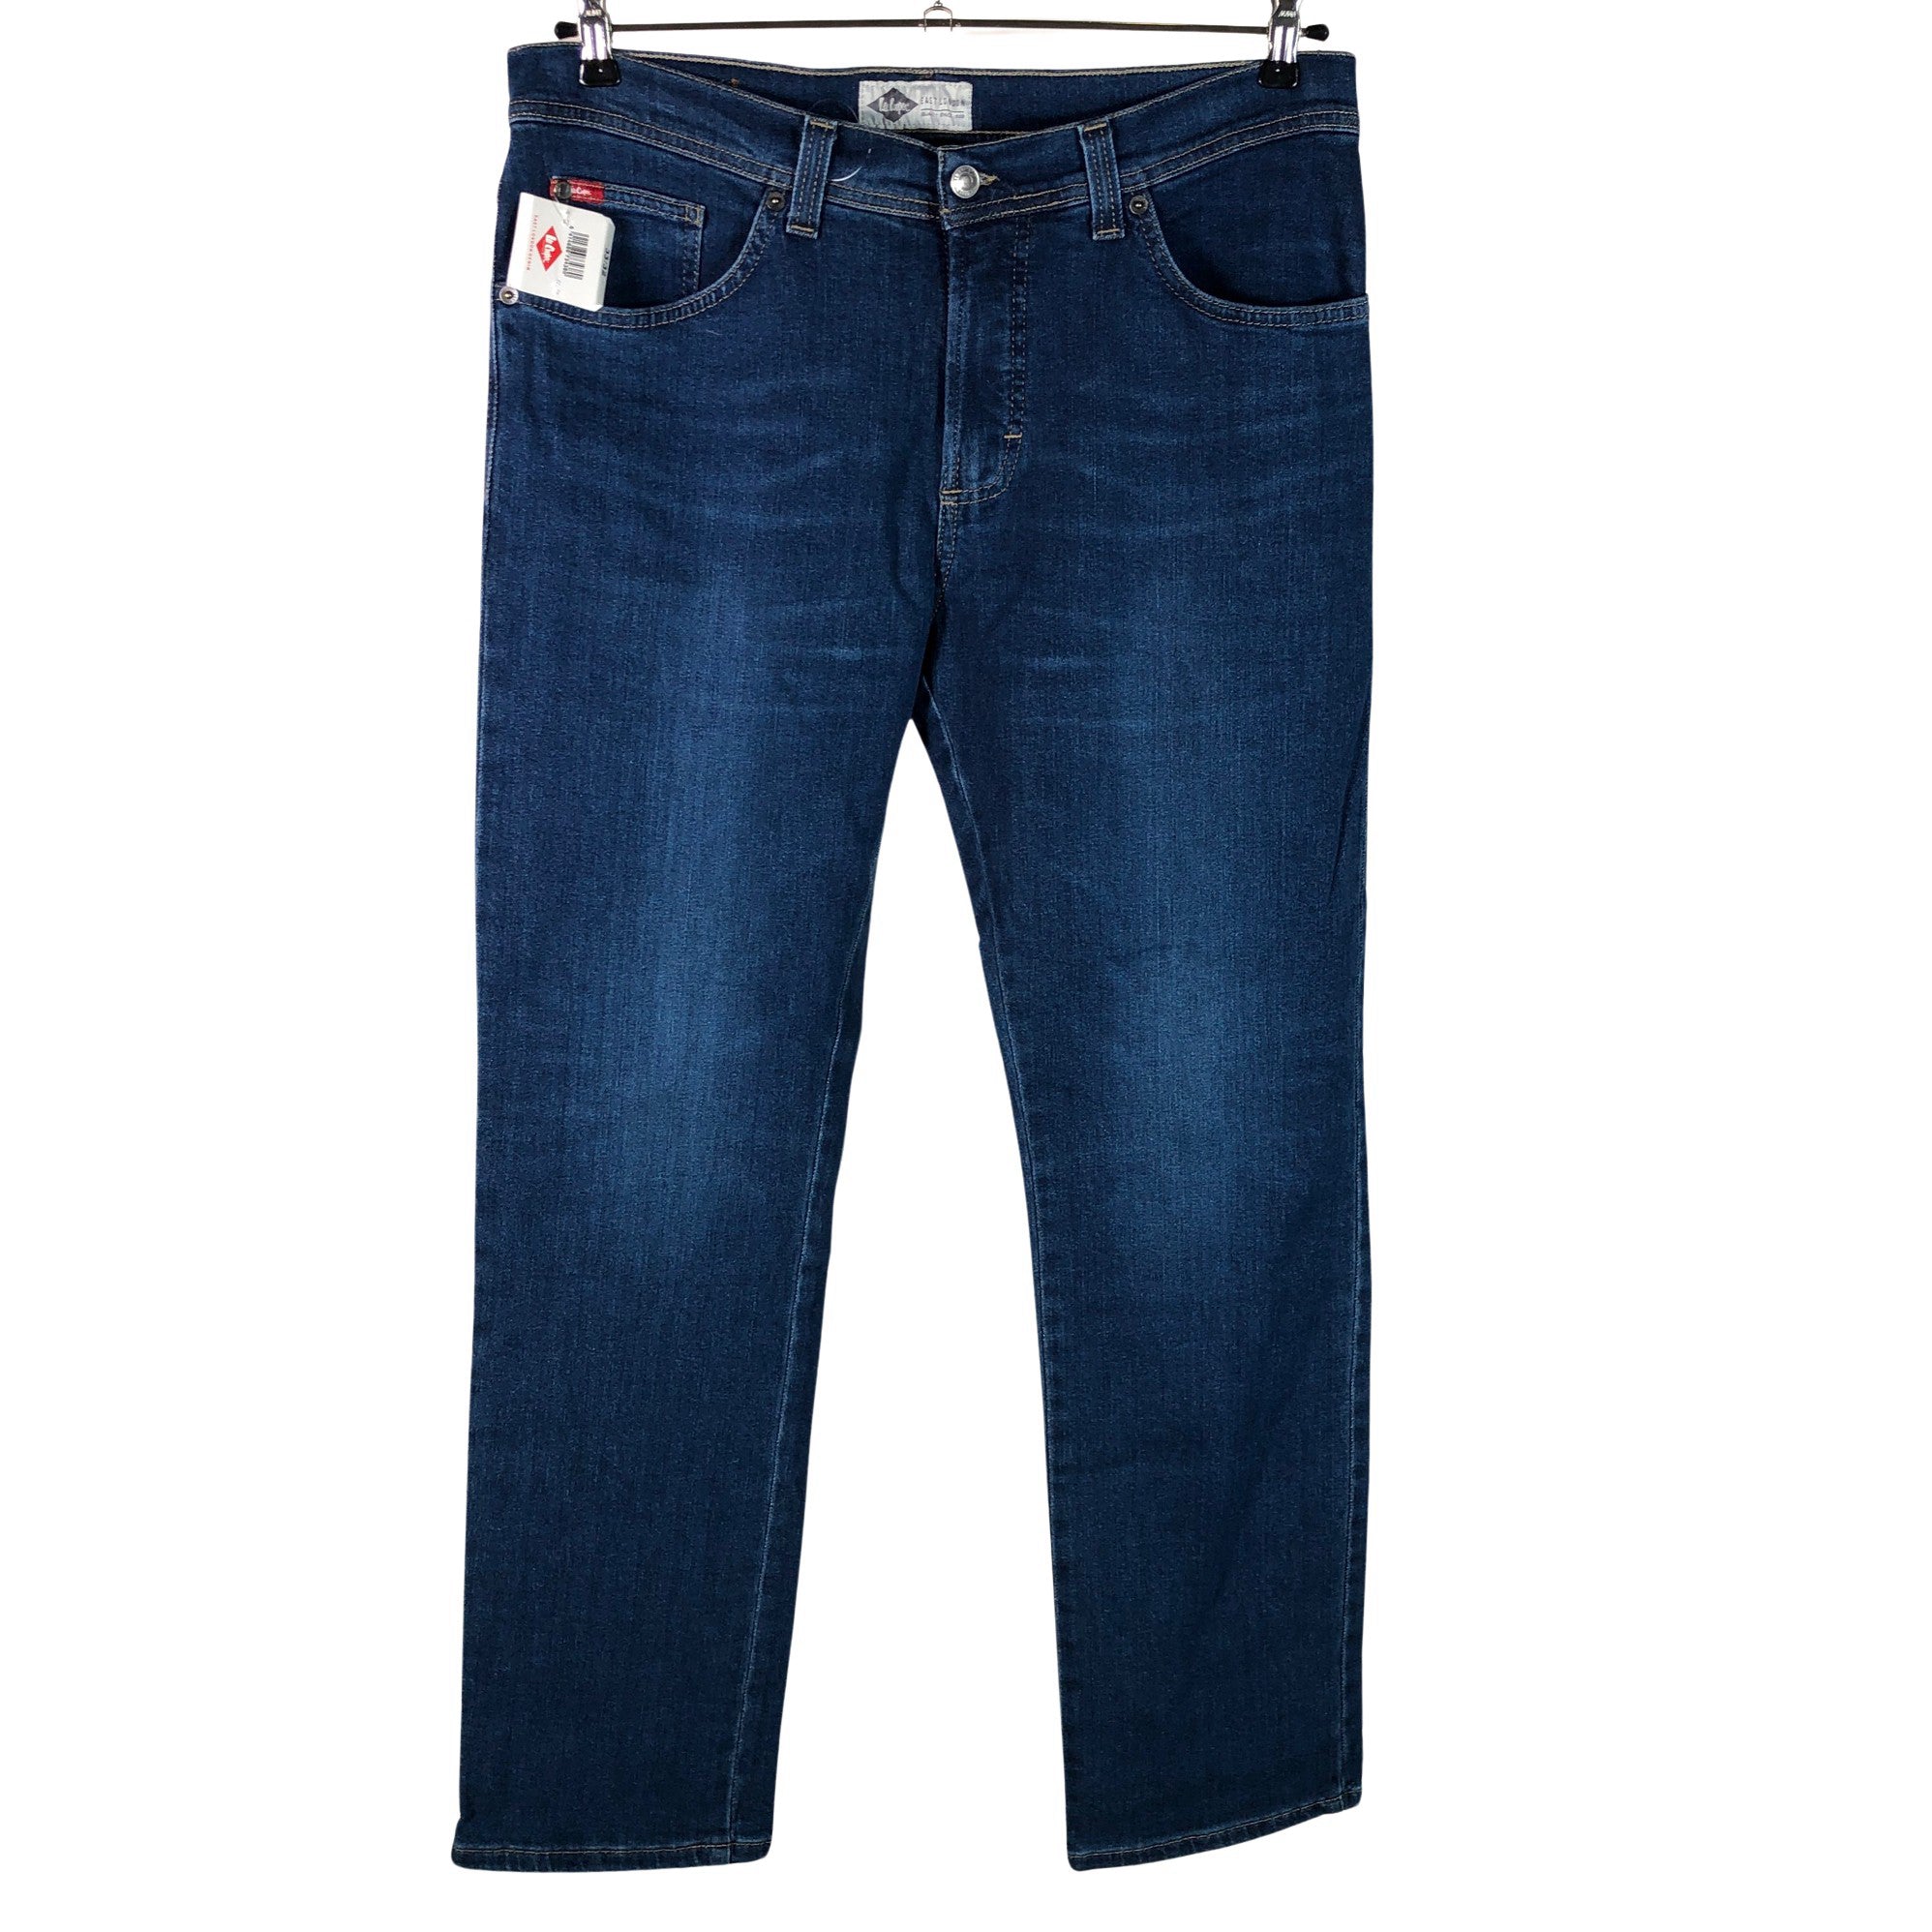 Lee Cooper Frank Slim Fit Blue Jeans Mens 30x28 Distressed Dark Blue | eBay